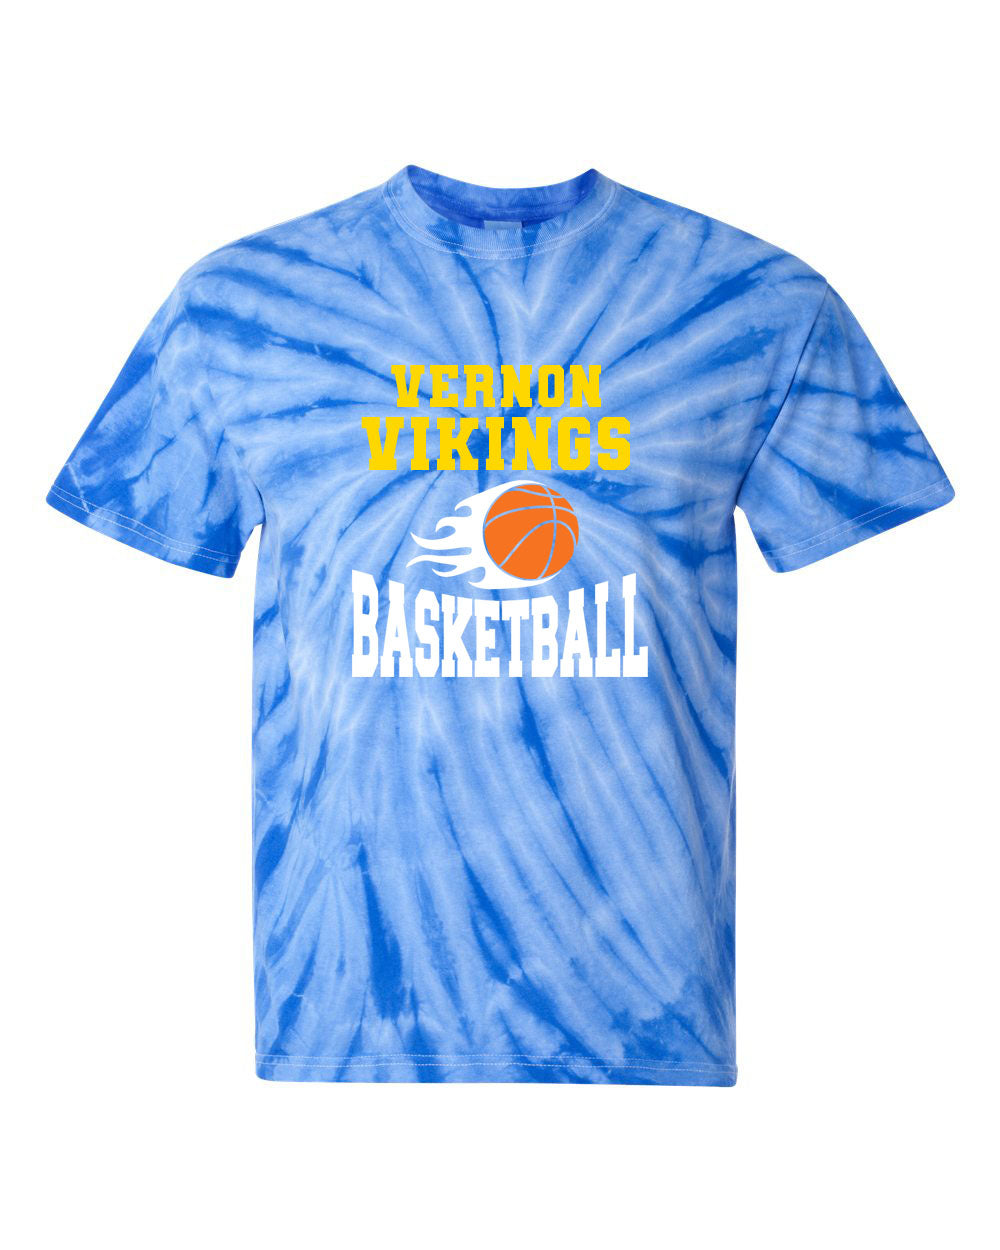 Vikings Basketball Tie Dye t-shirt Design 4